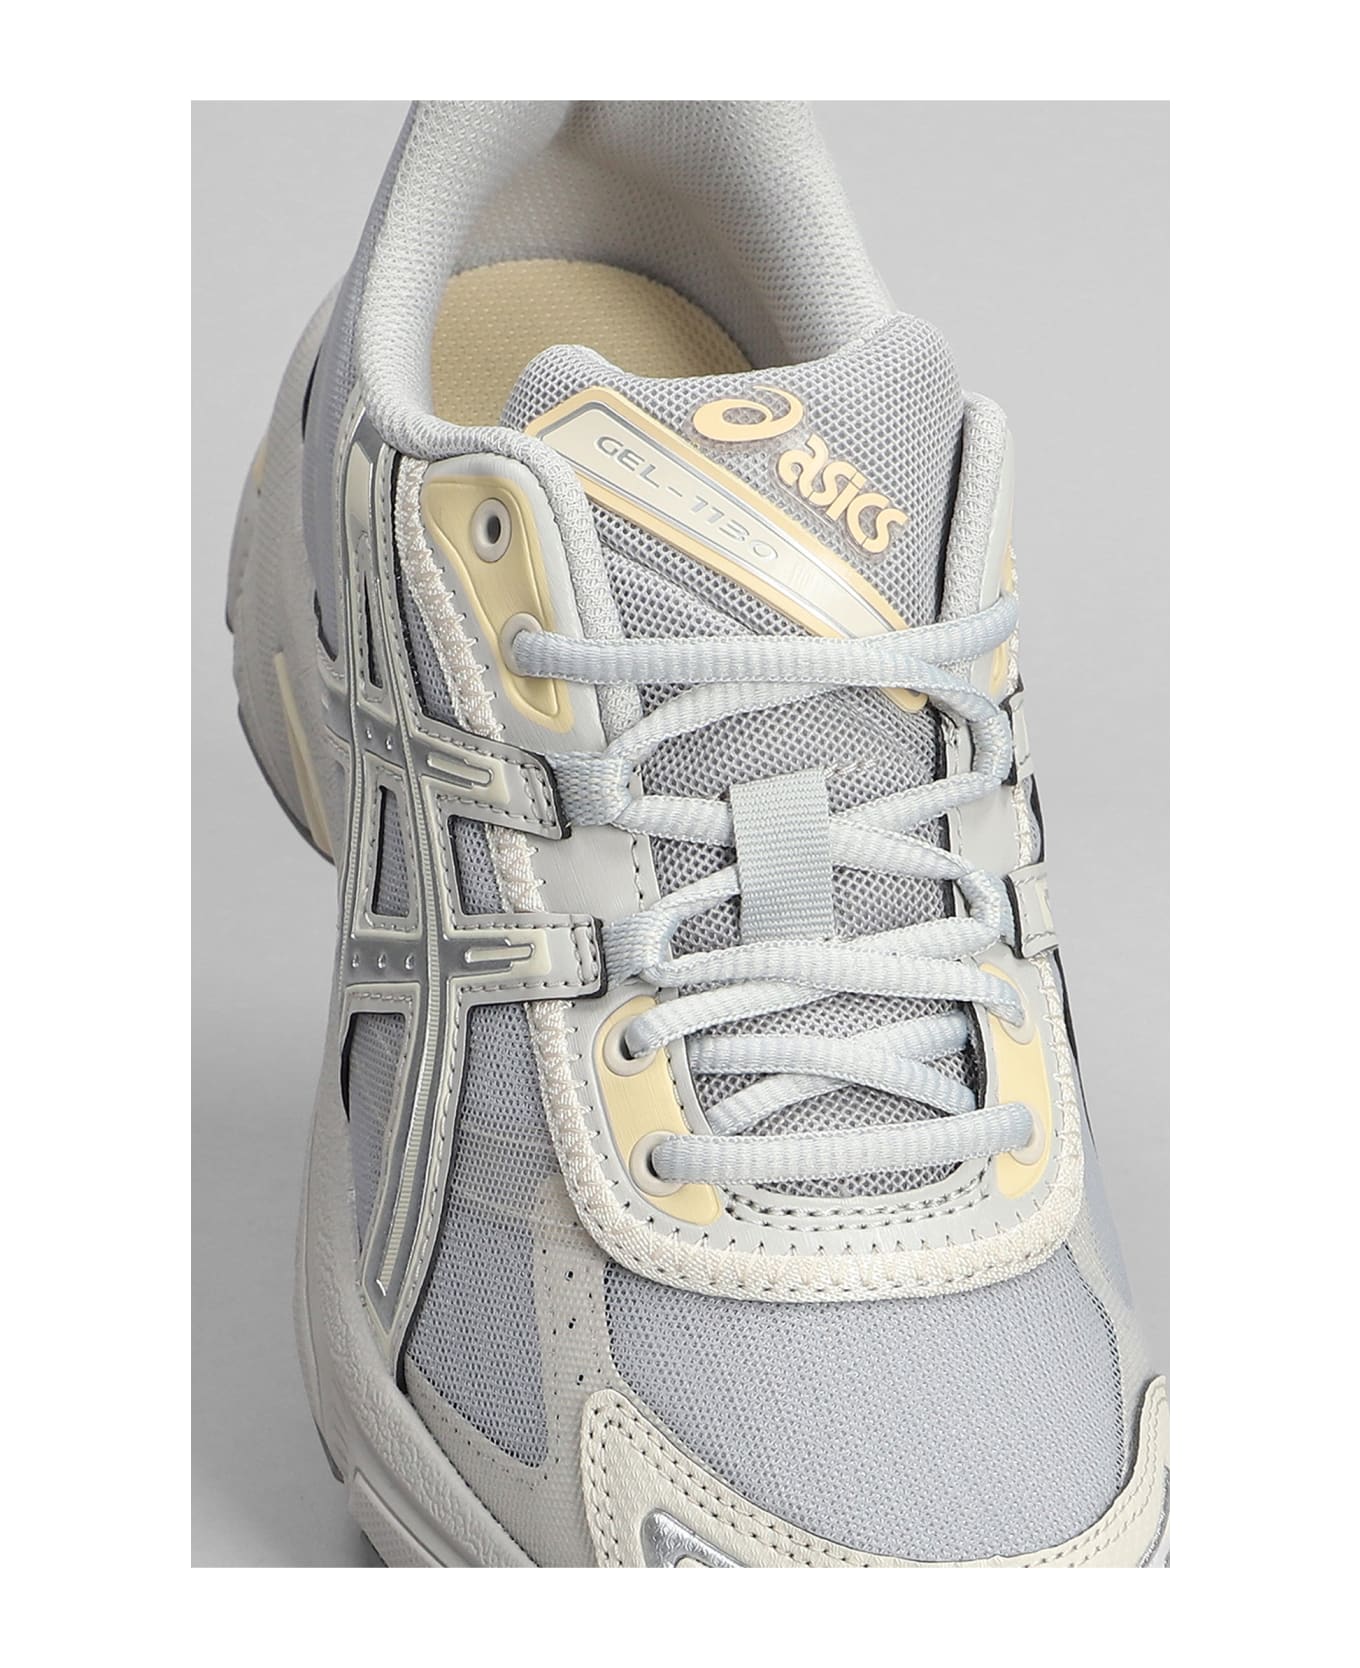 Asics Gel-1130 Re Sneakers In Grey Synthetic Fibers - grey